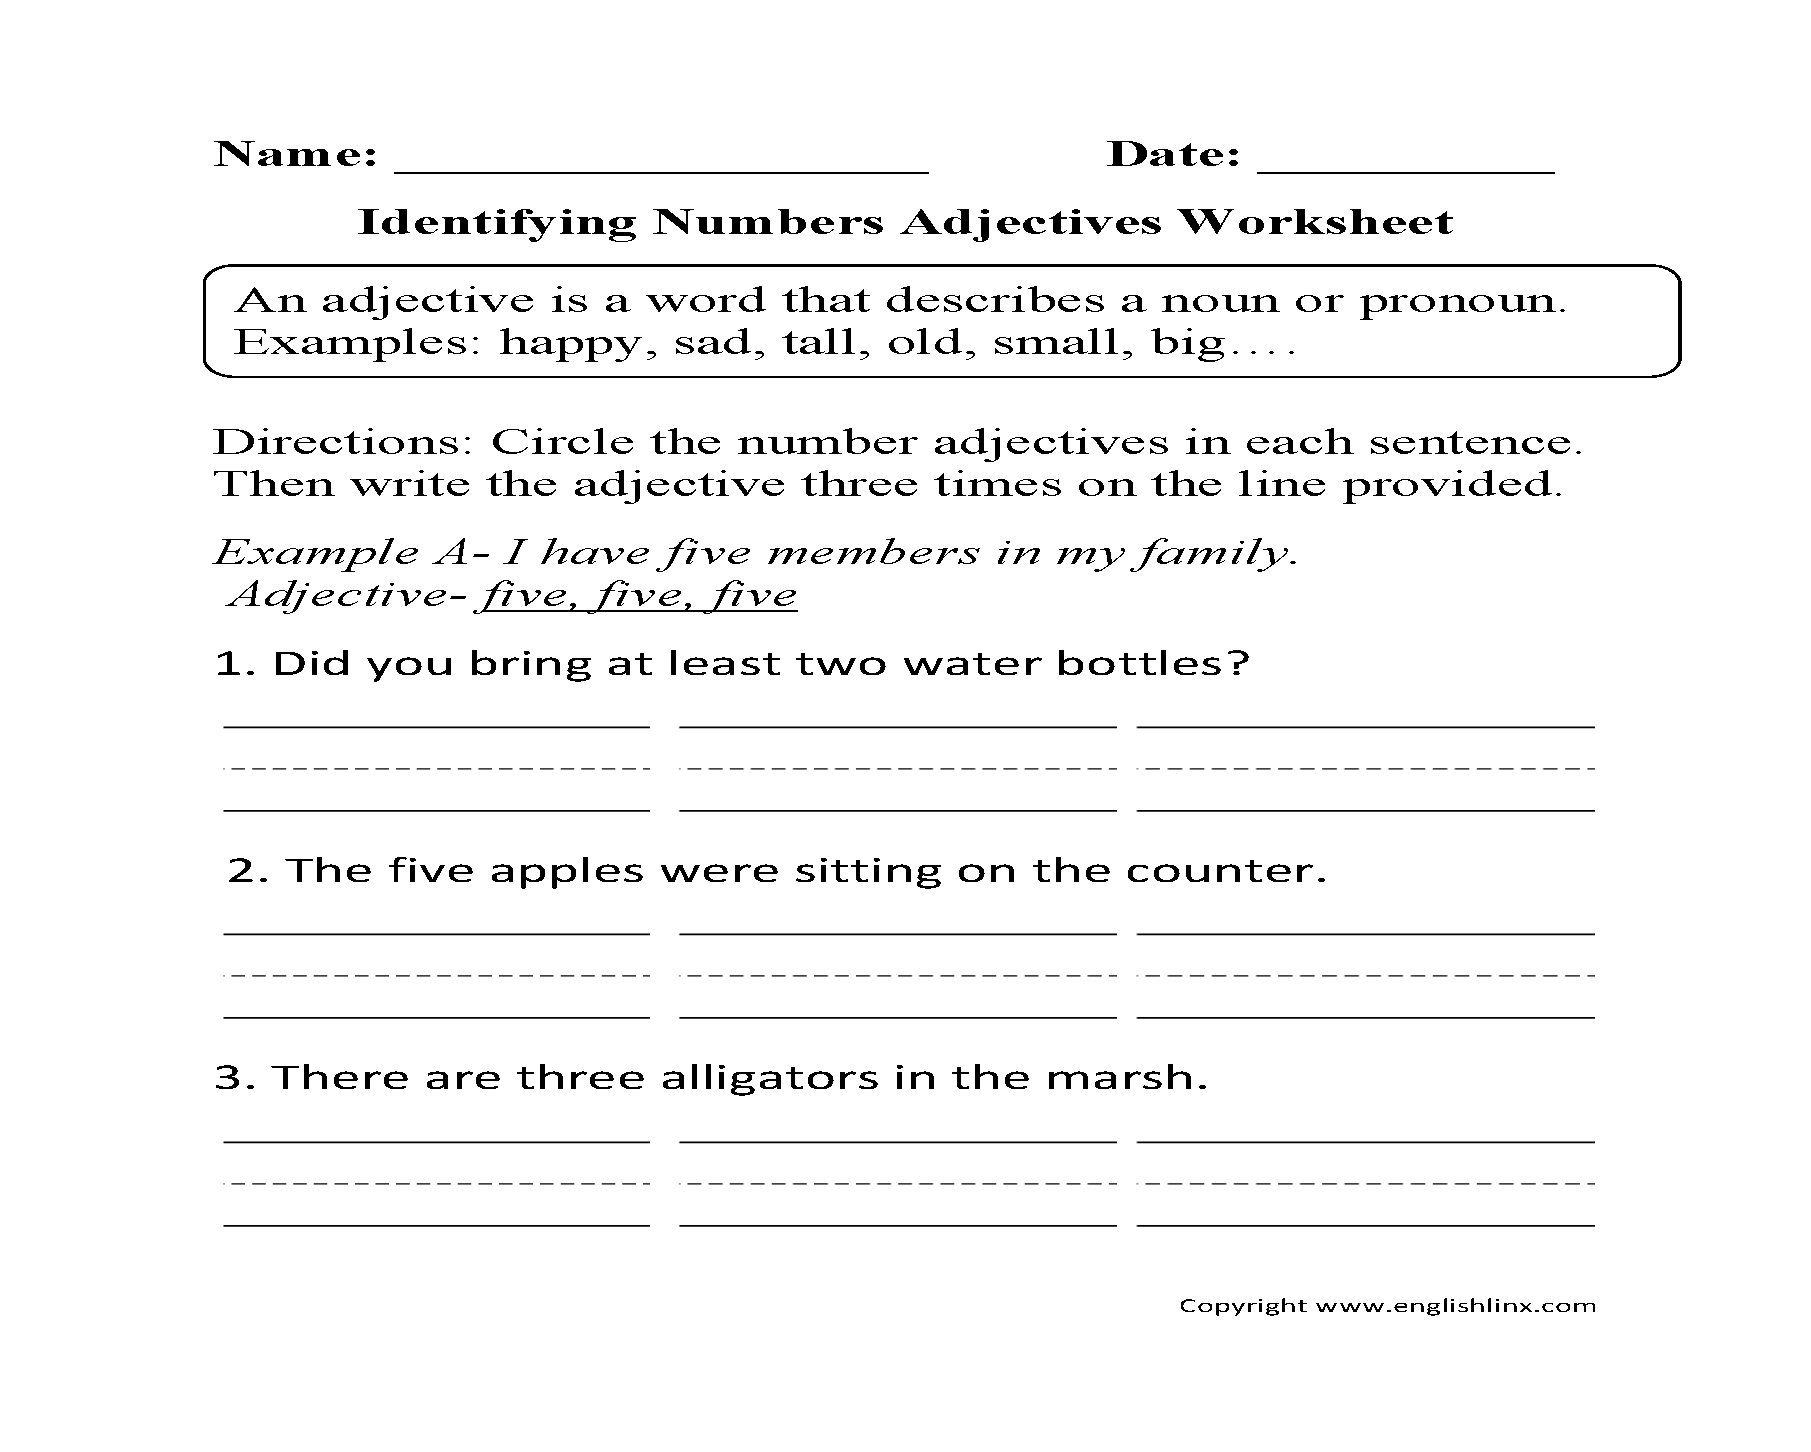 numerical-adjectives-worksheets-adjectiveworksheets